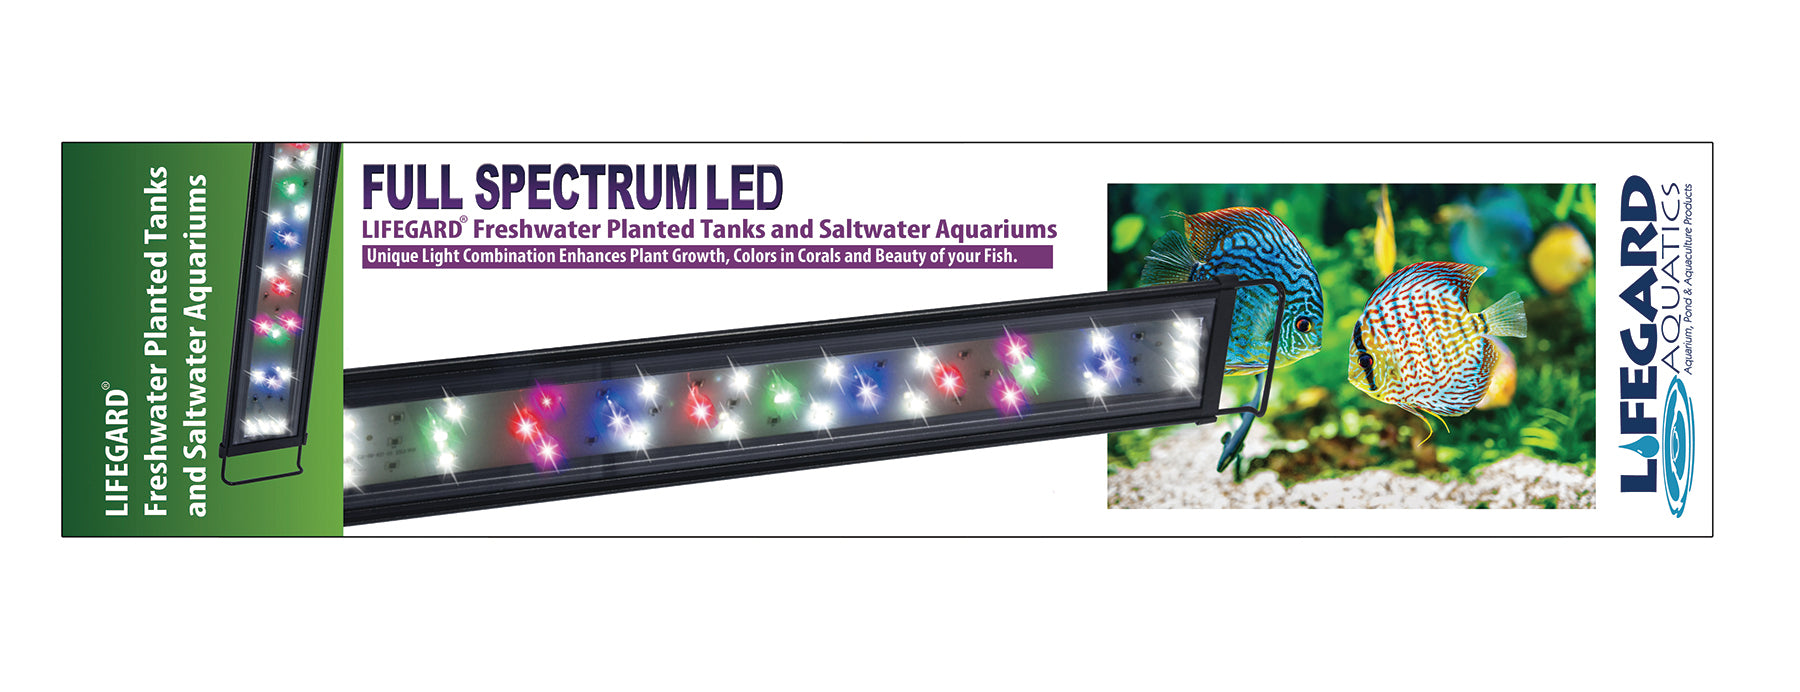 FULL SPECTRUM 36 LED Light Lumens: 1398 Lux: 2880 Watts: 30 - Lifegard  Aquatics